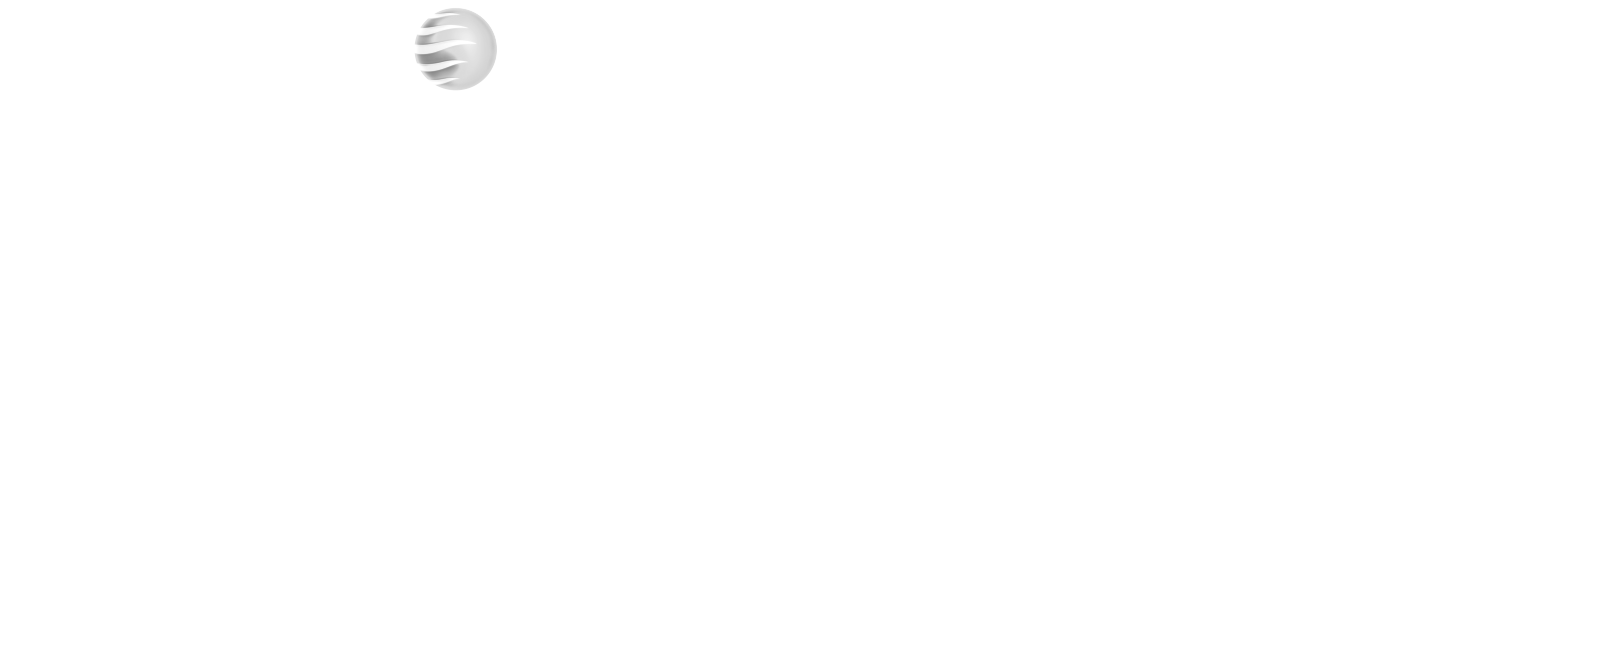 Partners: Tensio, Skarerak Energi, Arva, Lede, Oso Energy, Deftpower, Enode, Sikom, Gridio, FourC, Current, Hark, EVBox, Norgesnett, Fjordkraft